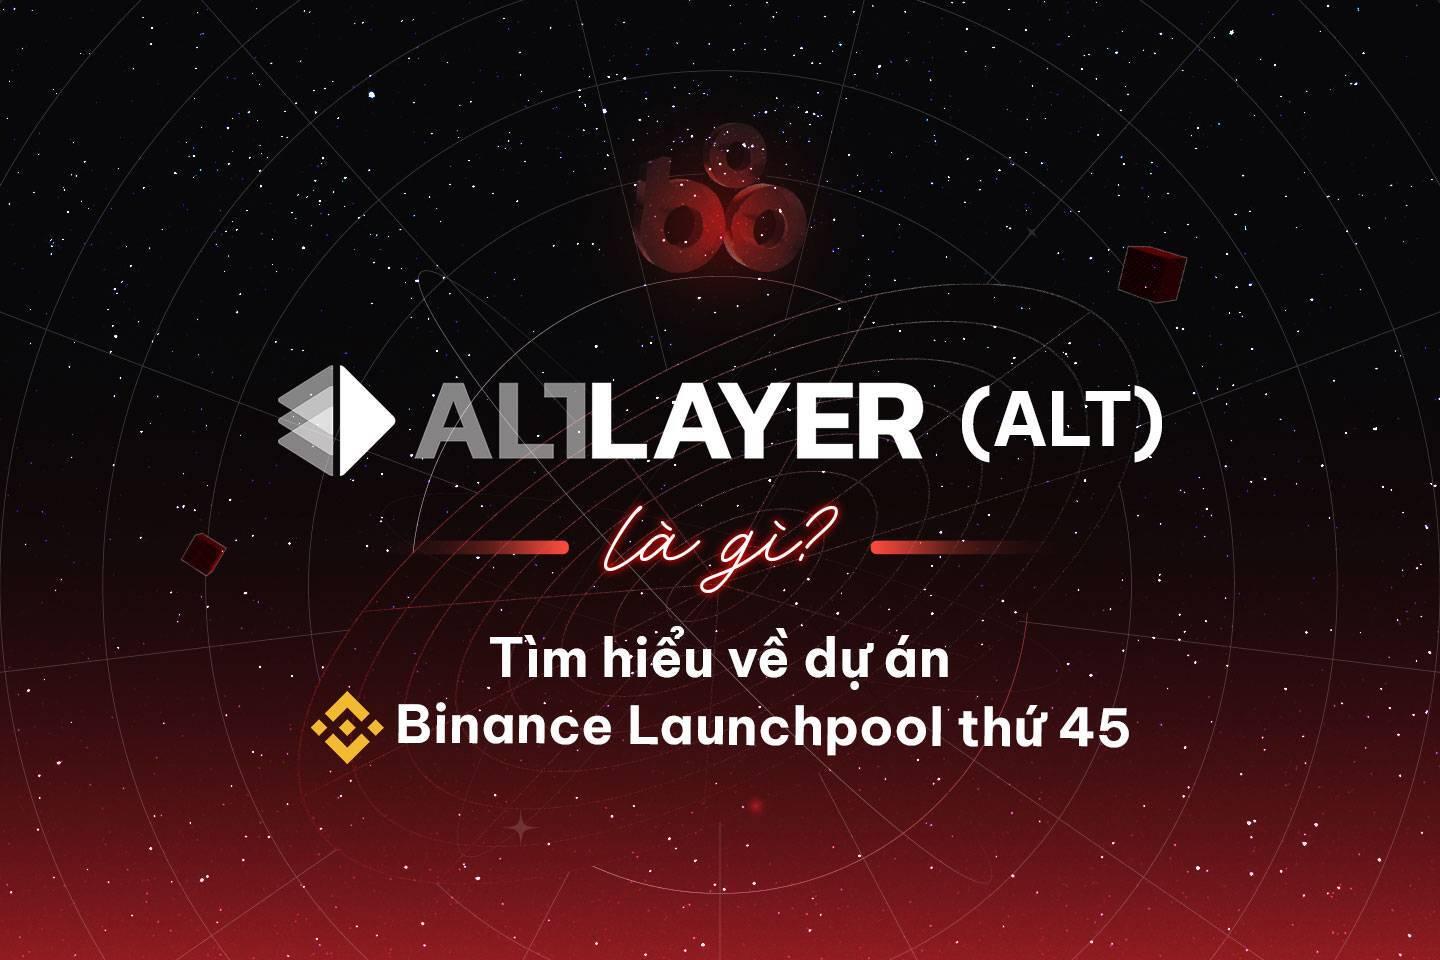 altlayer-alt-la-gi-tim-hieu-ve-du-an-binance-launchpool-thu-45